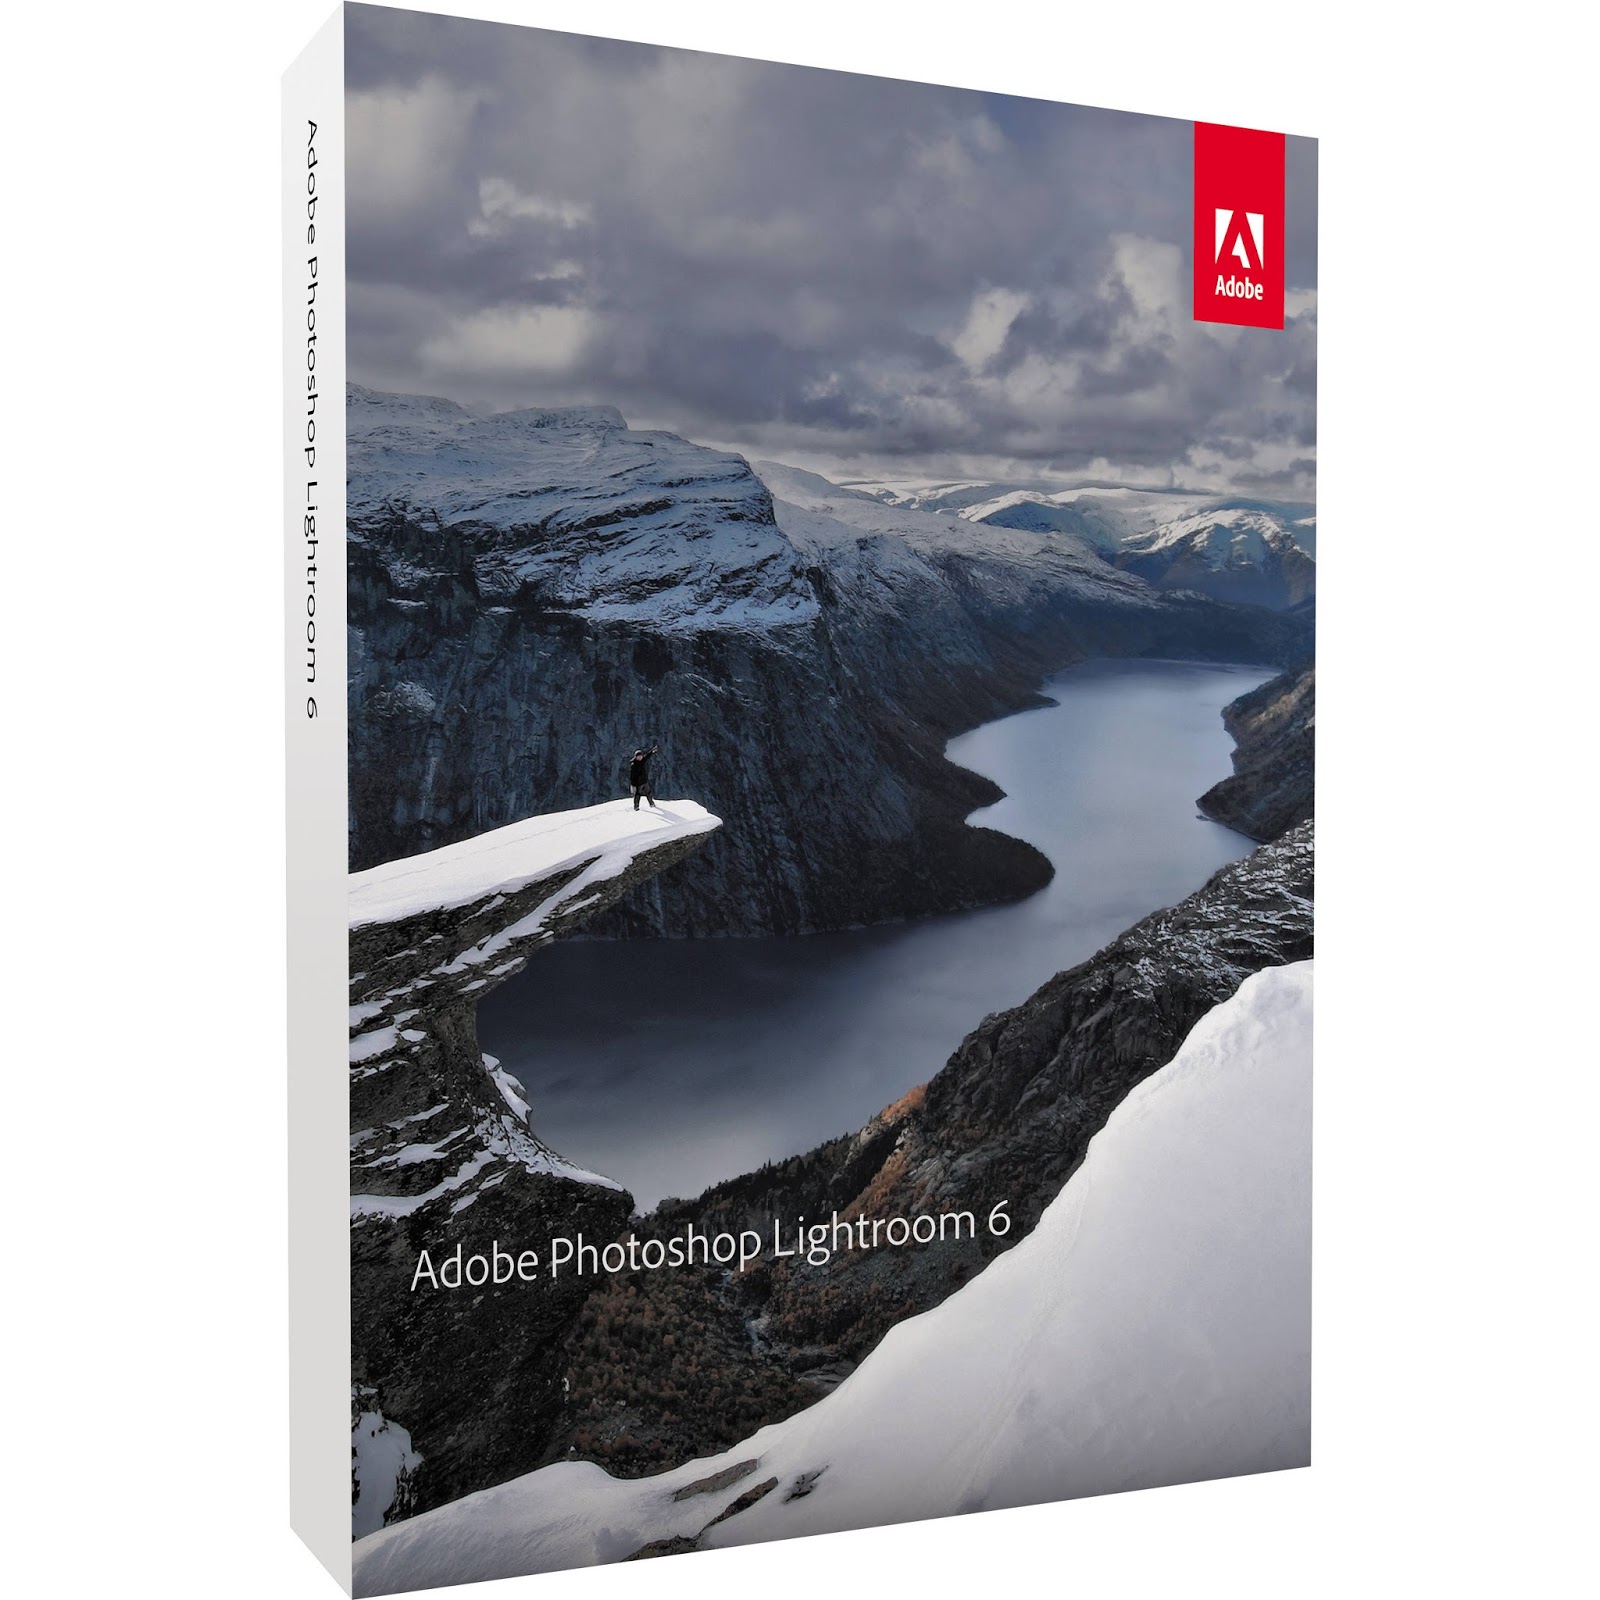 Adobe lightroom 6.0 full crack free